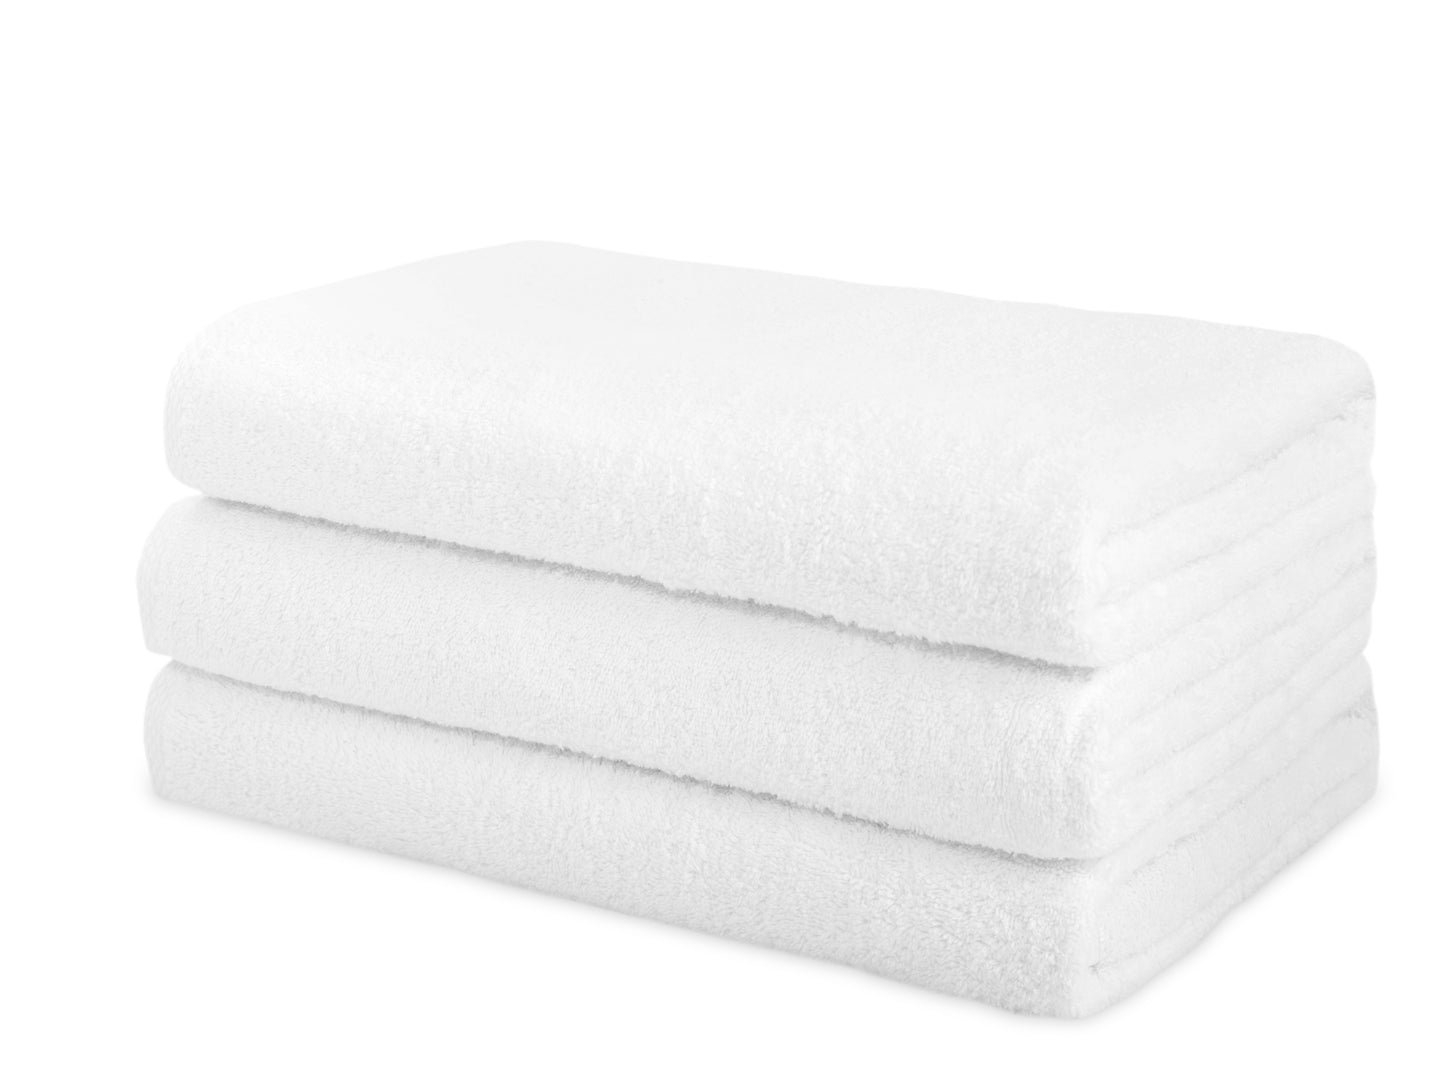 Hospitality Turkish Cotton Bath Sheet - 3 Pieces - Classic Turkish Towels